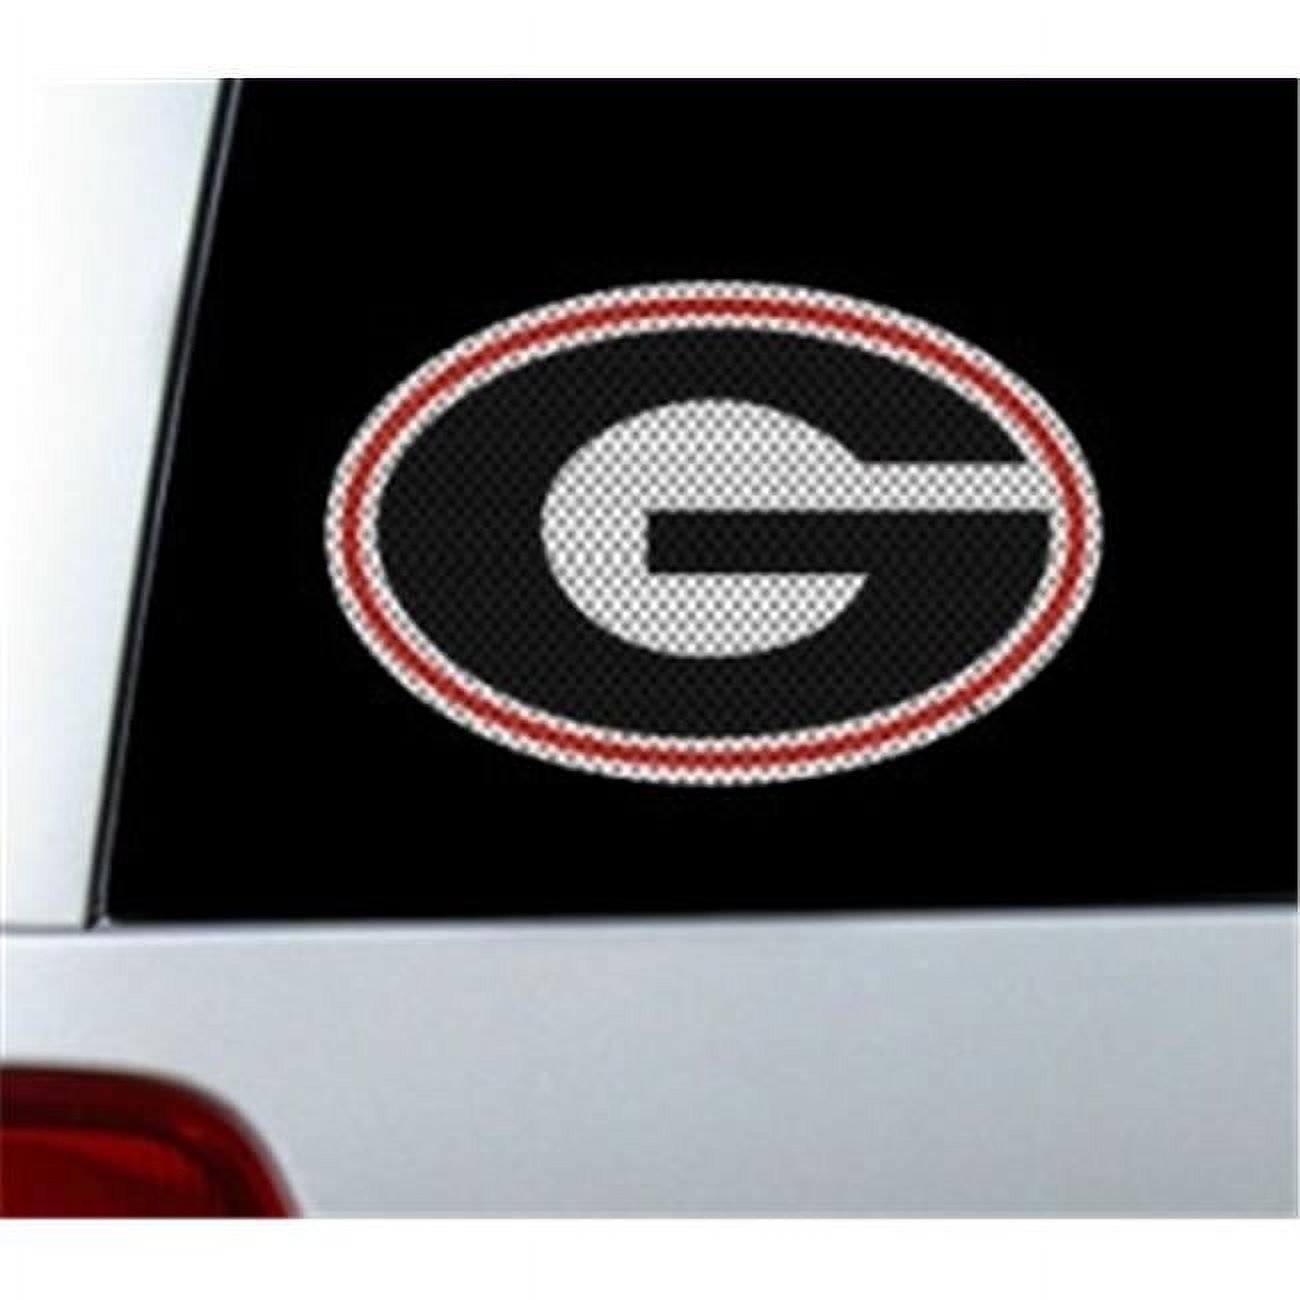 University of Georgia Bulldogs Window Film - image 1 of 2